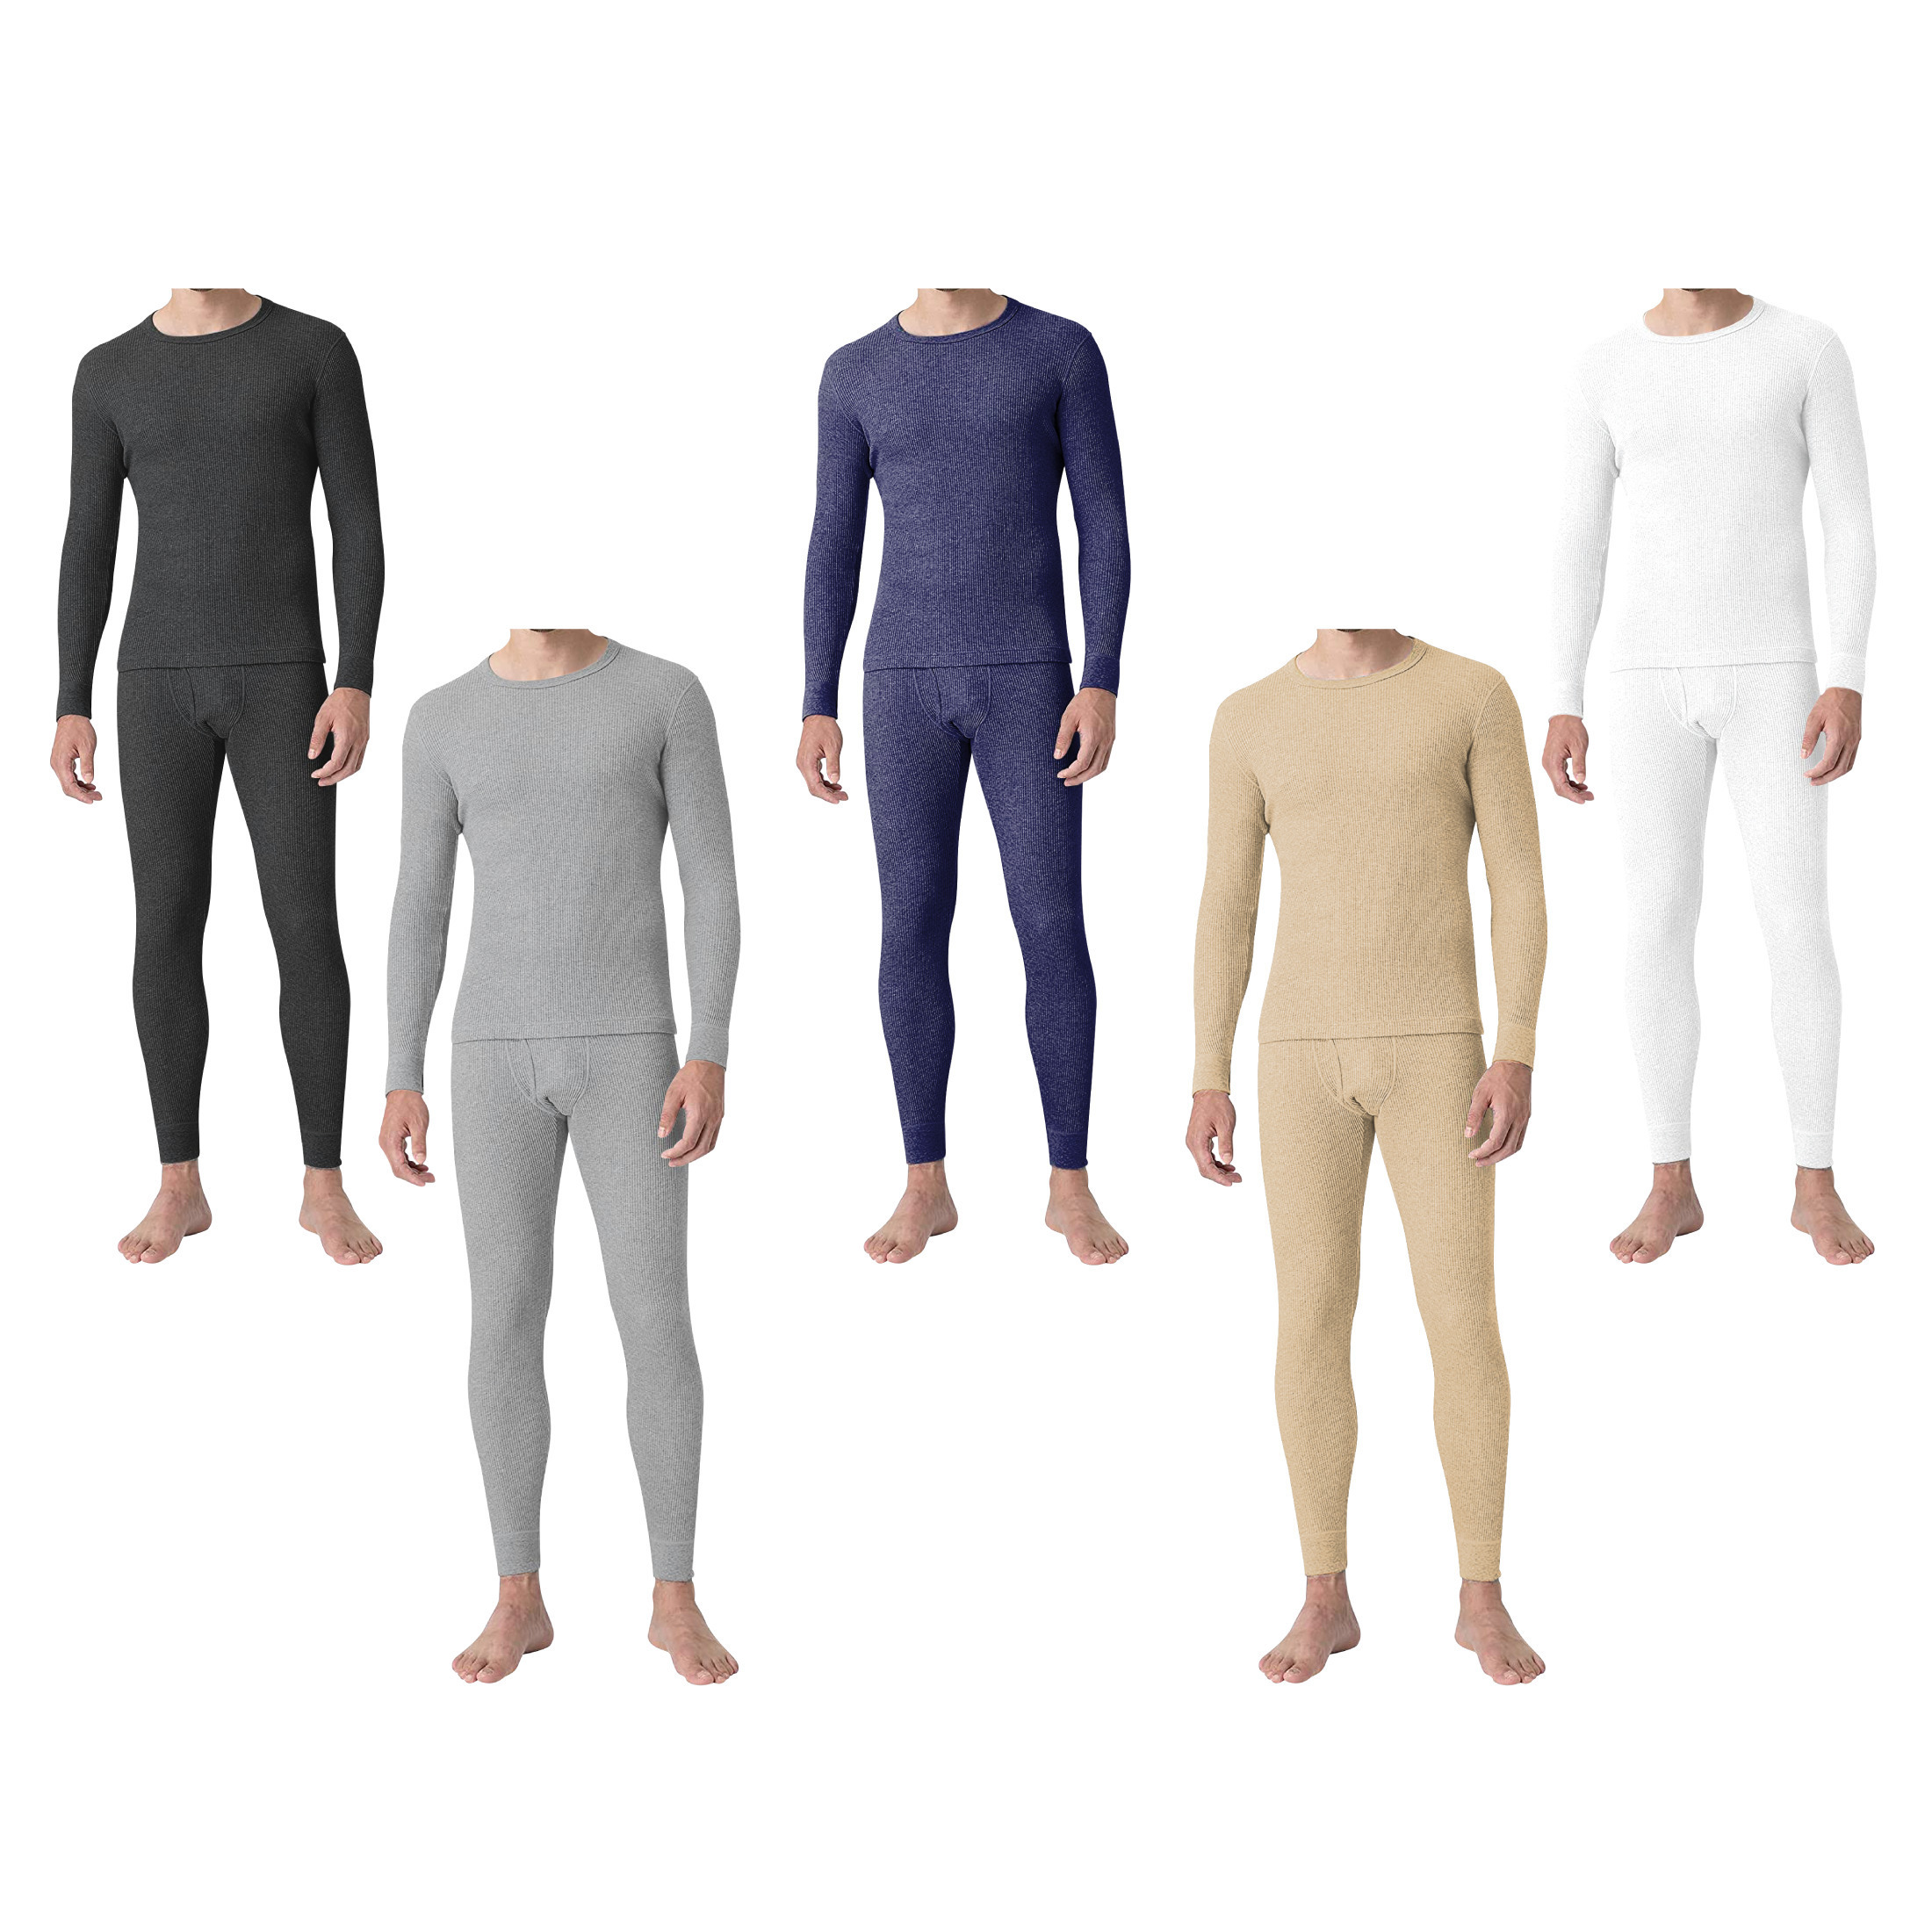 2-Sets: Men's Super Soft Cotton Waffle Knit Winter Thermal Underwear Set - Grey & Navy, Large